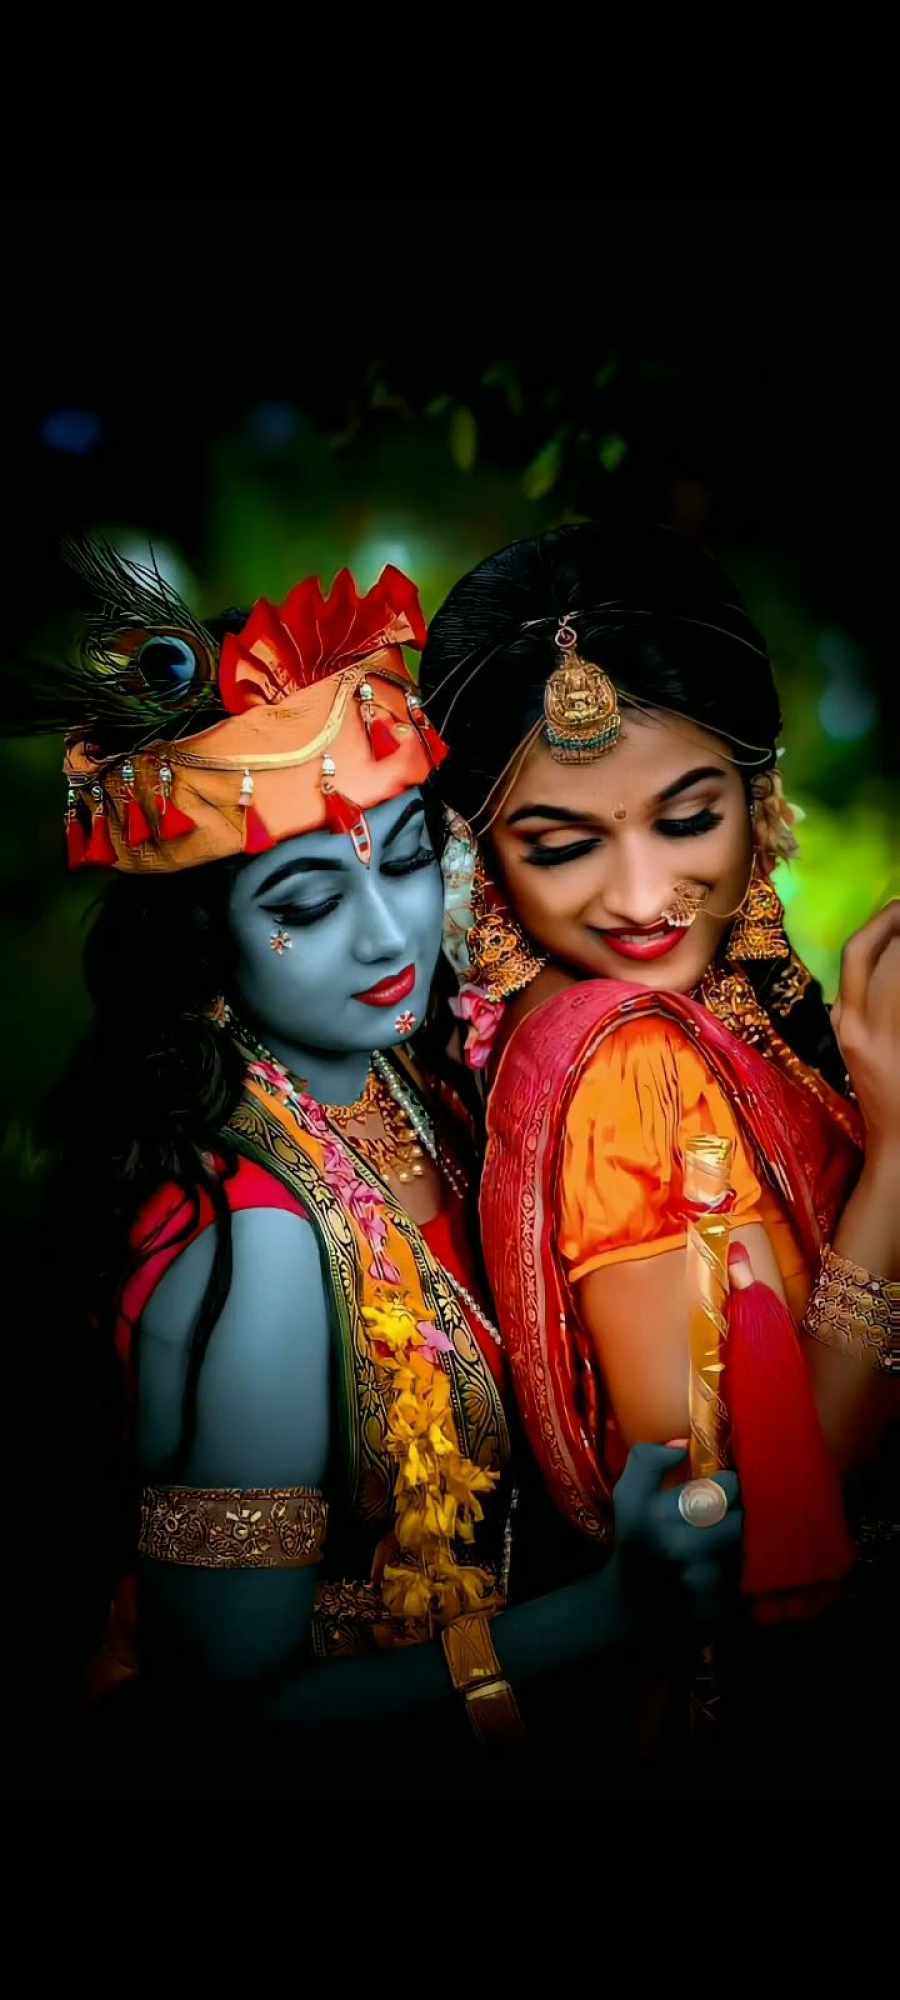 HD 400+} Hindu God Images & Hindu Bhagwan Photos Free Download | Shiva  parvati images, Lord photo, Lord shiva